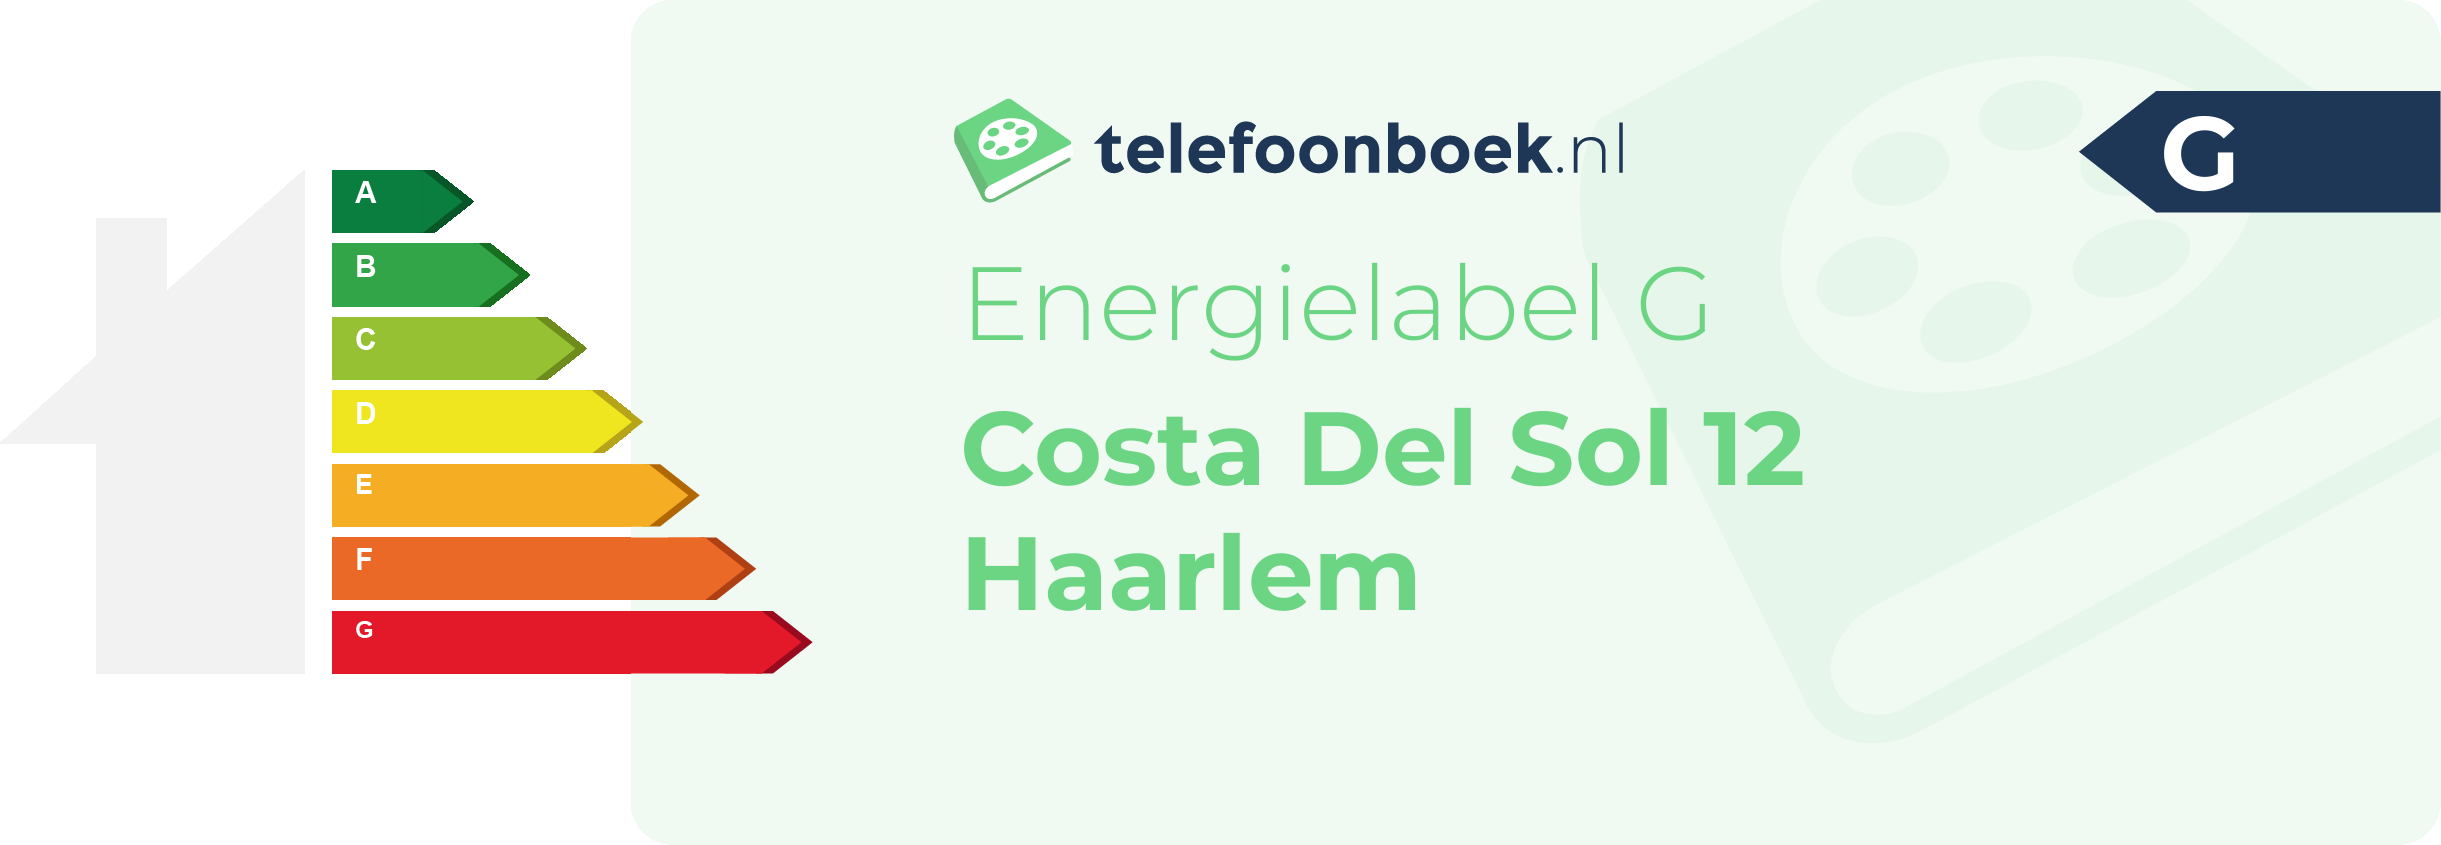 Energielabel Costa Del Sol 12 Haarlem